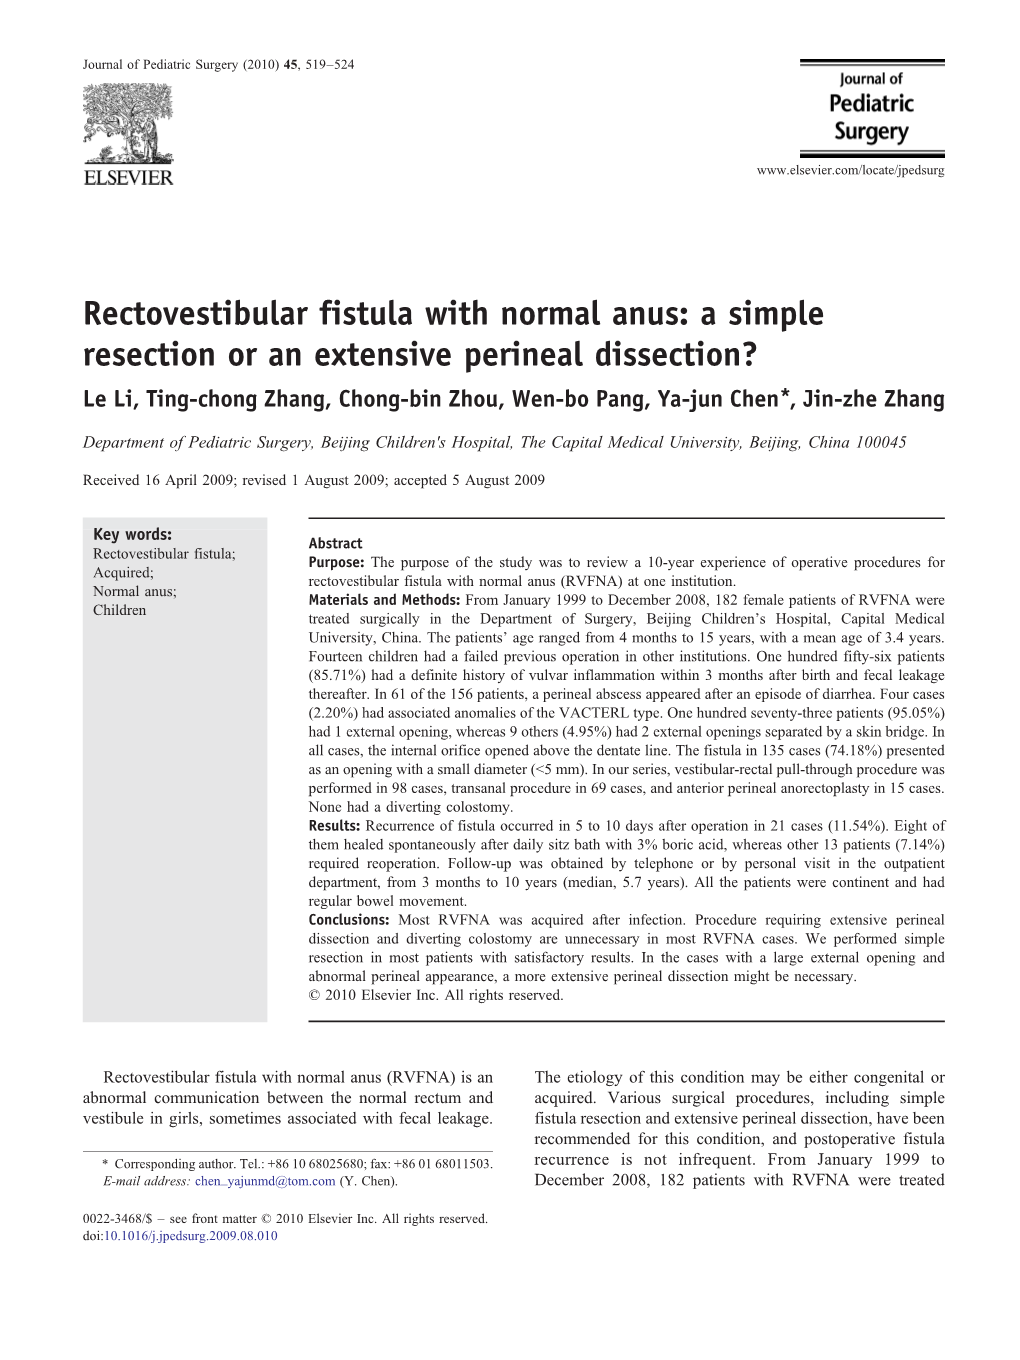 Rectovestibular Fistula with Normal Anus